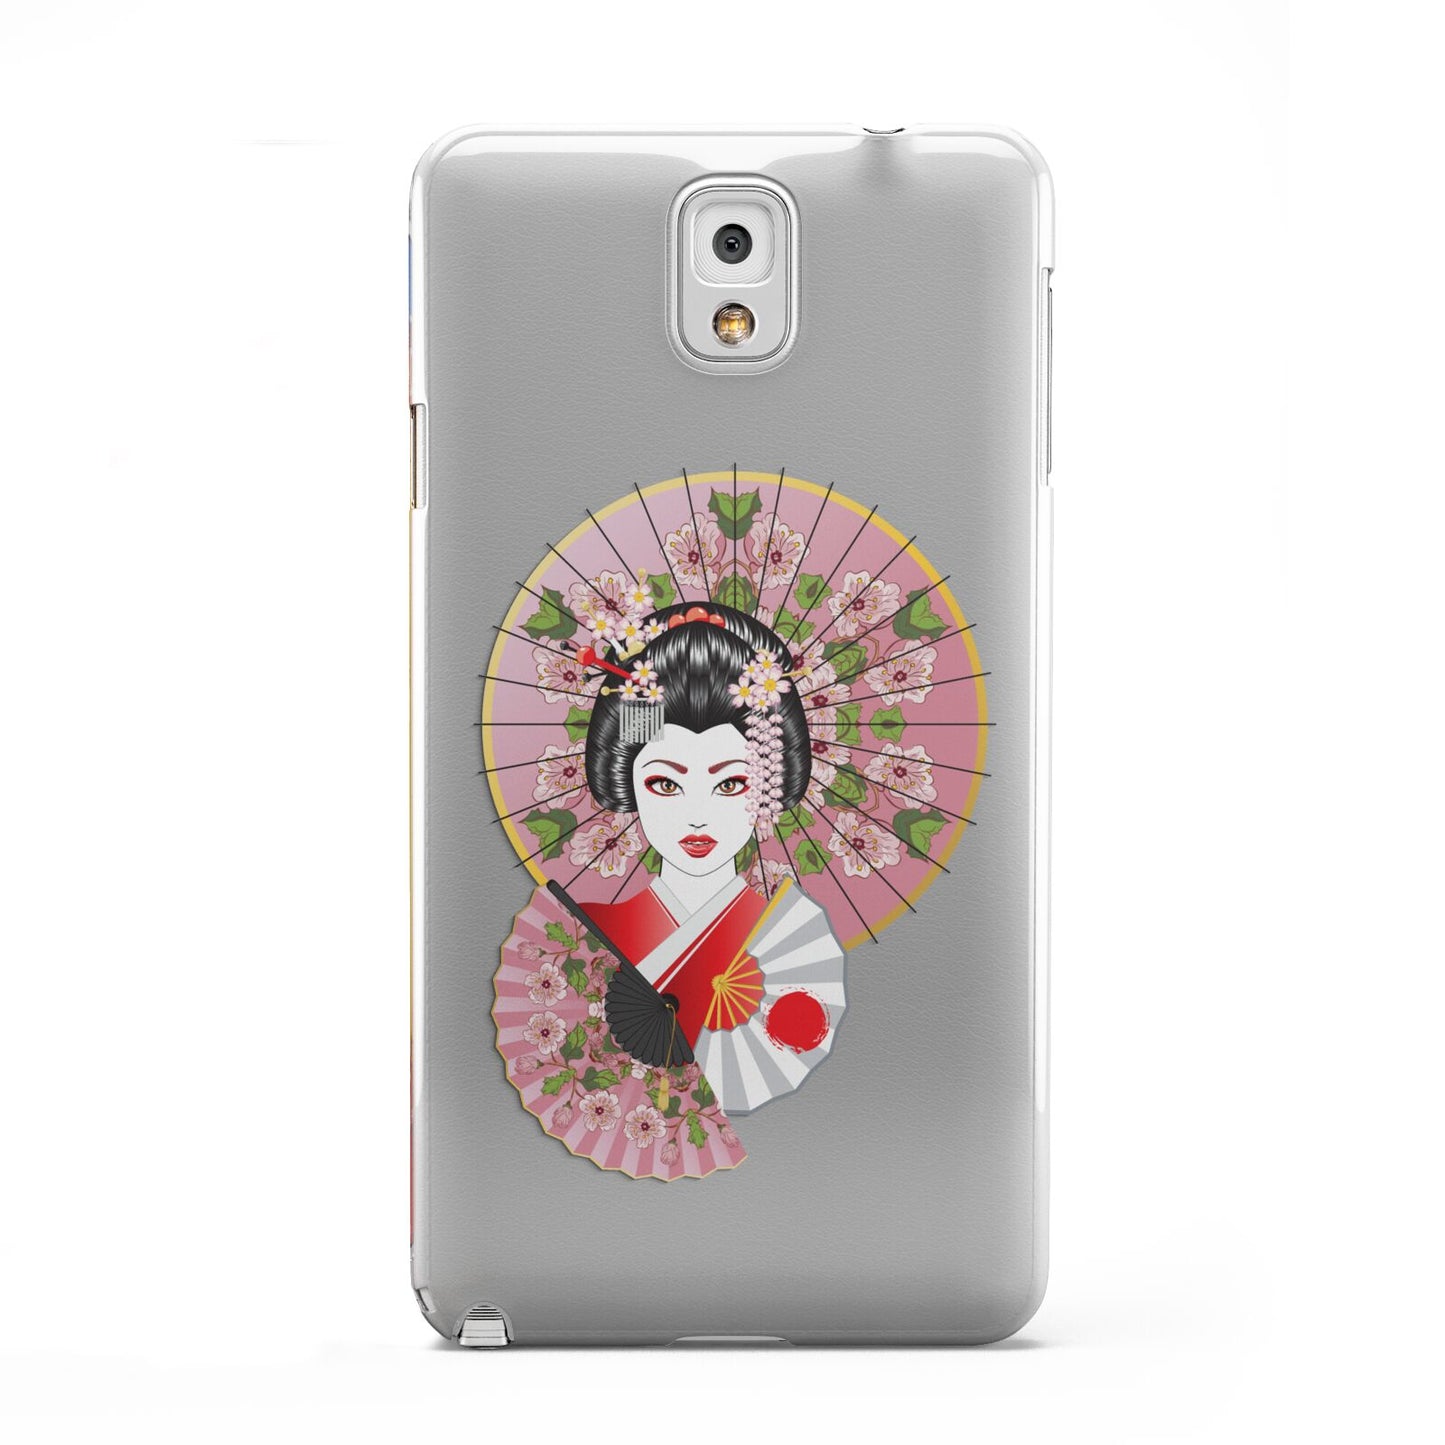 Geisha Girl Samsung Galaxy Note 3 Case